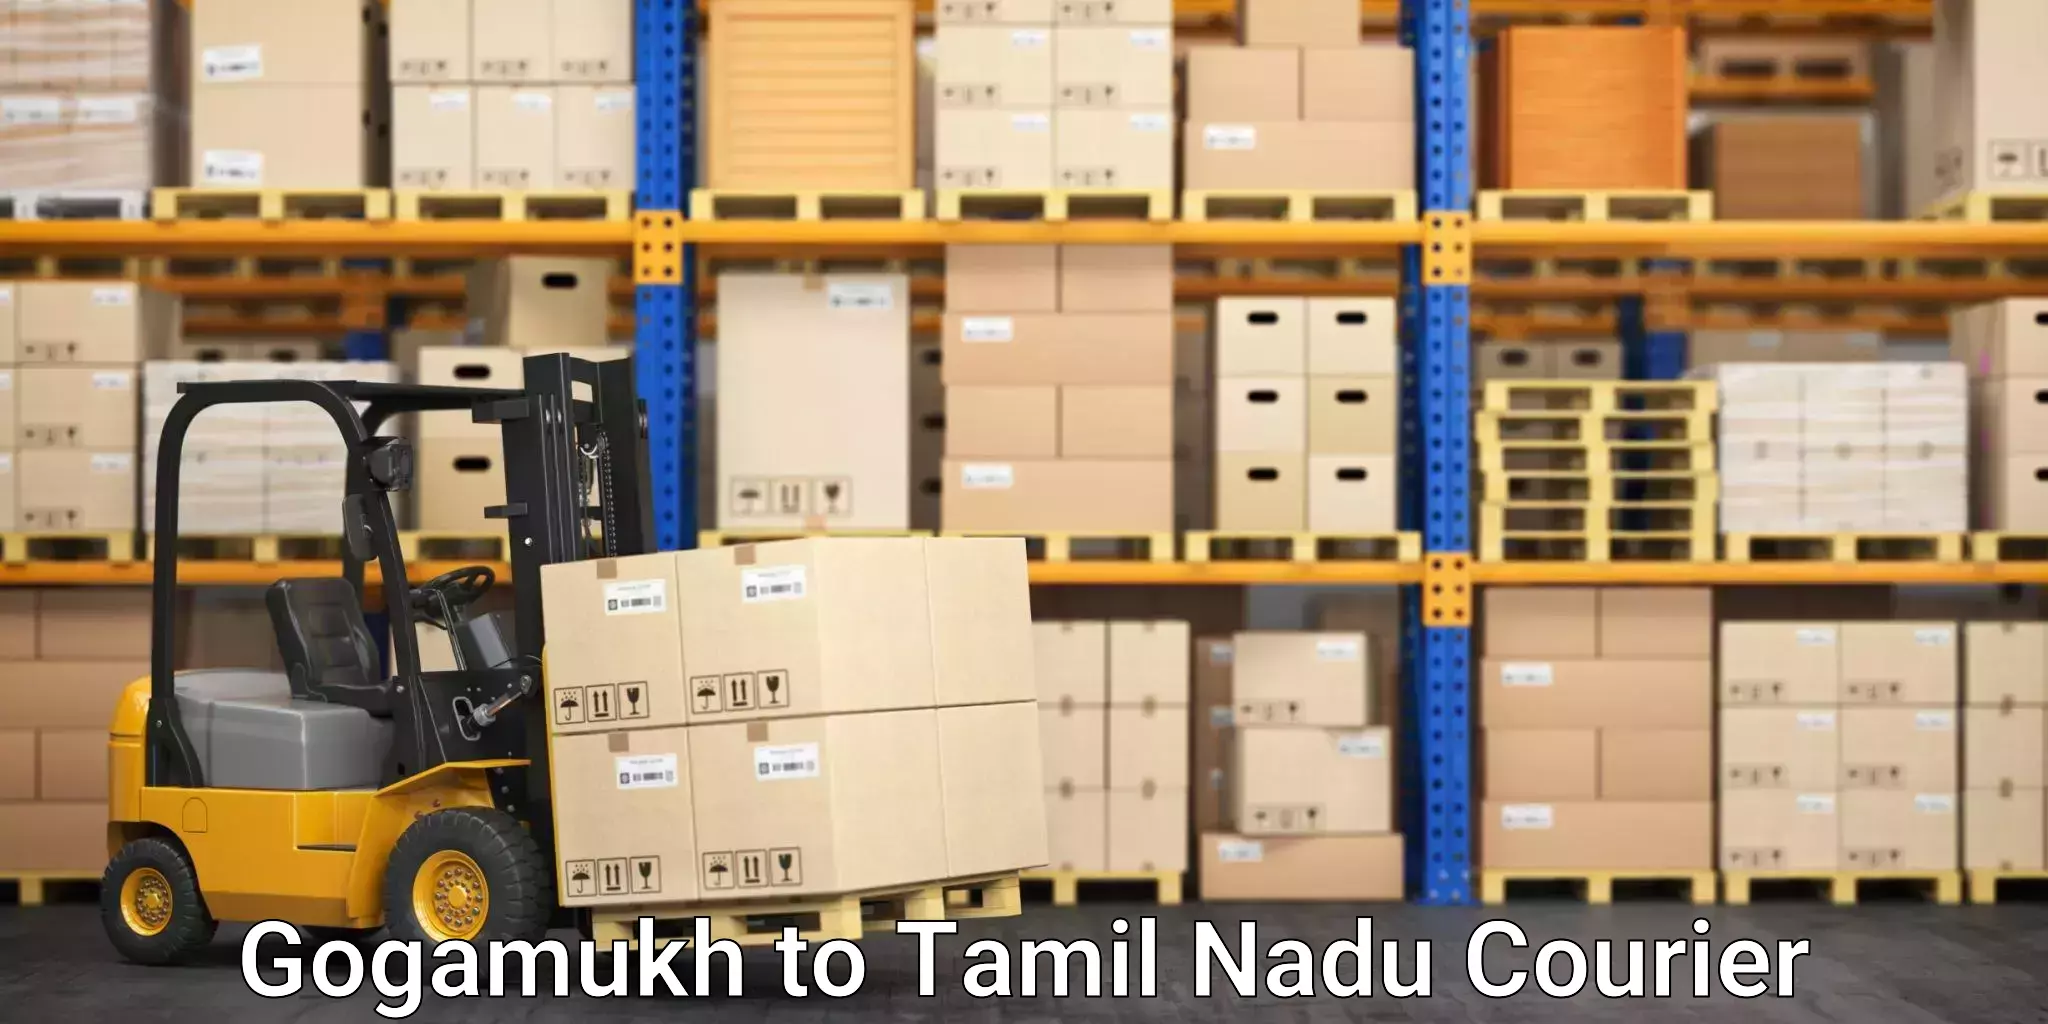 Fast delivery service Gogamukh to Tamil Nadu